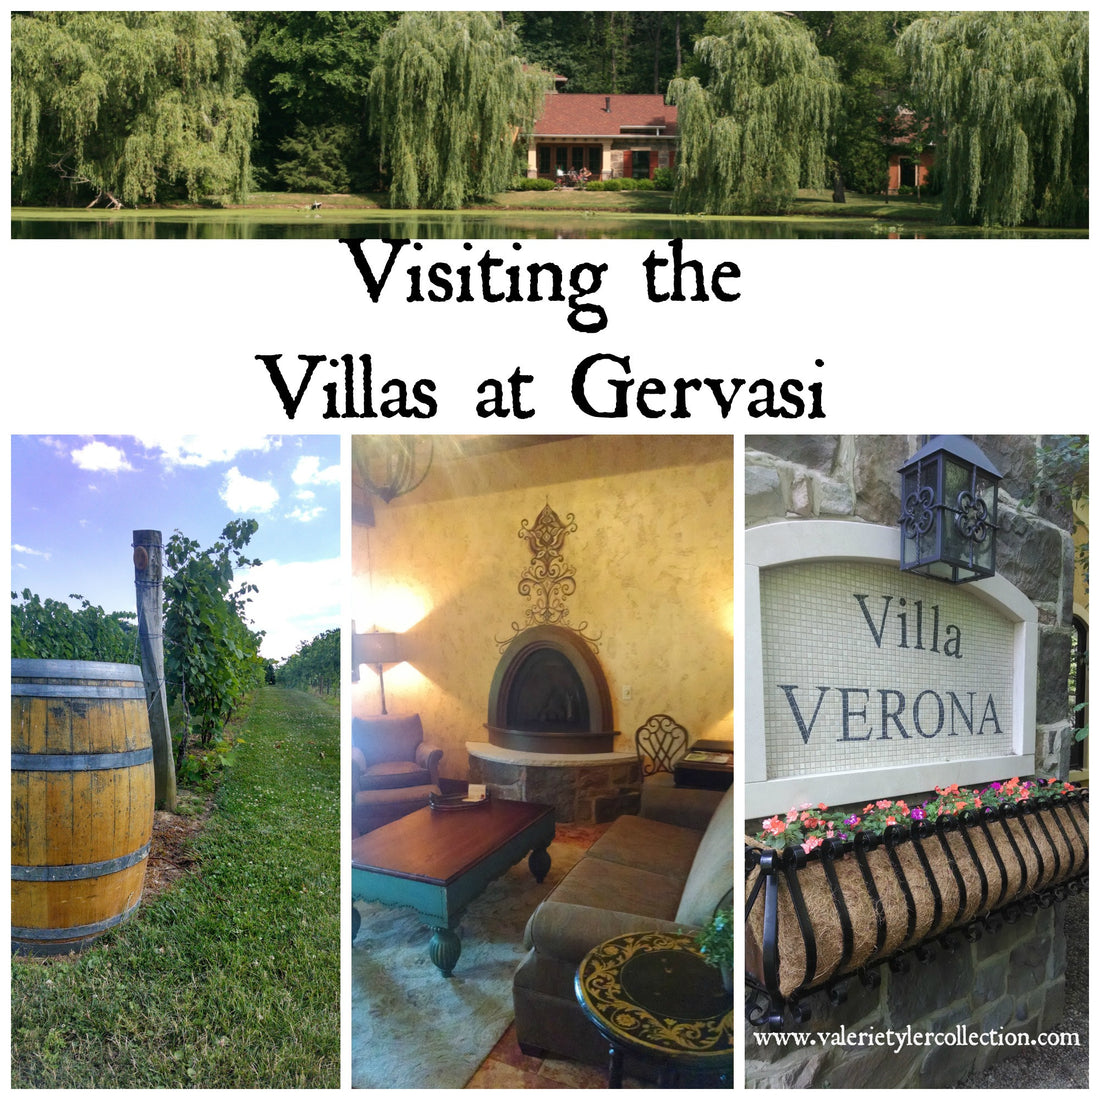 The Villas at Gervasi Vineyard Review